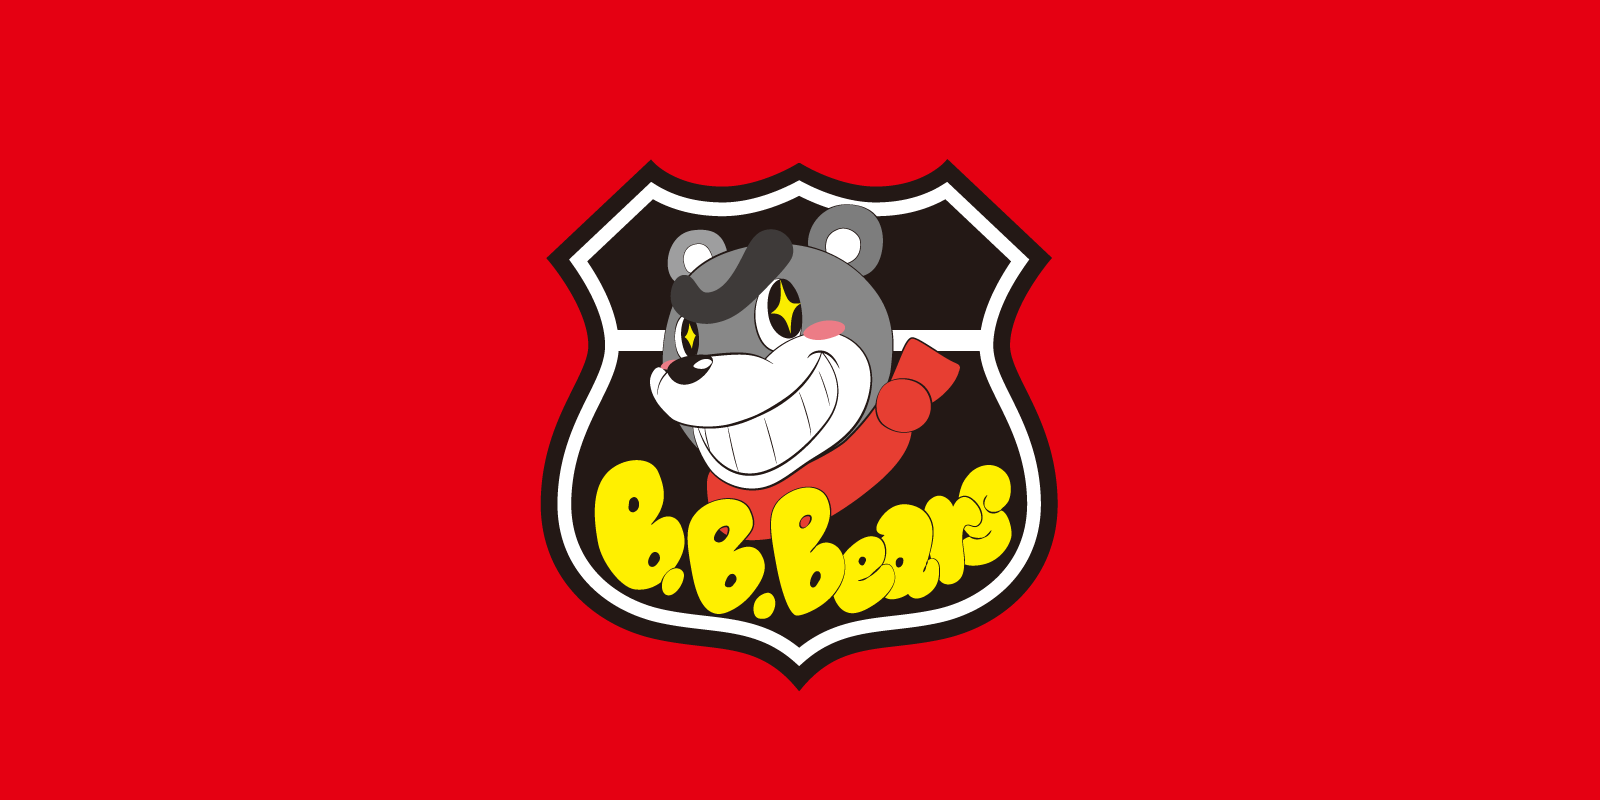 bbbears_logo_04.png